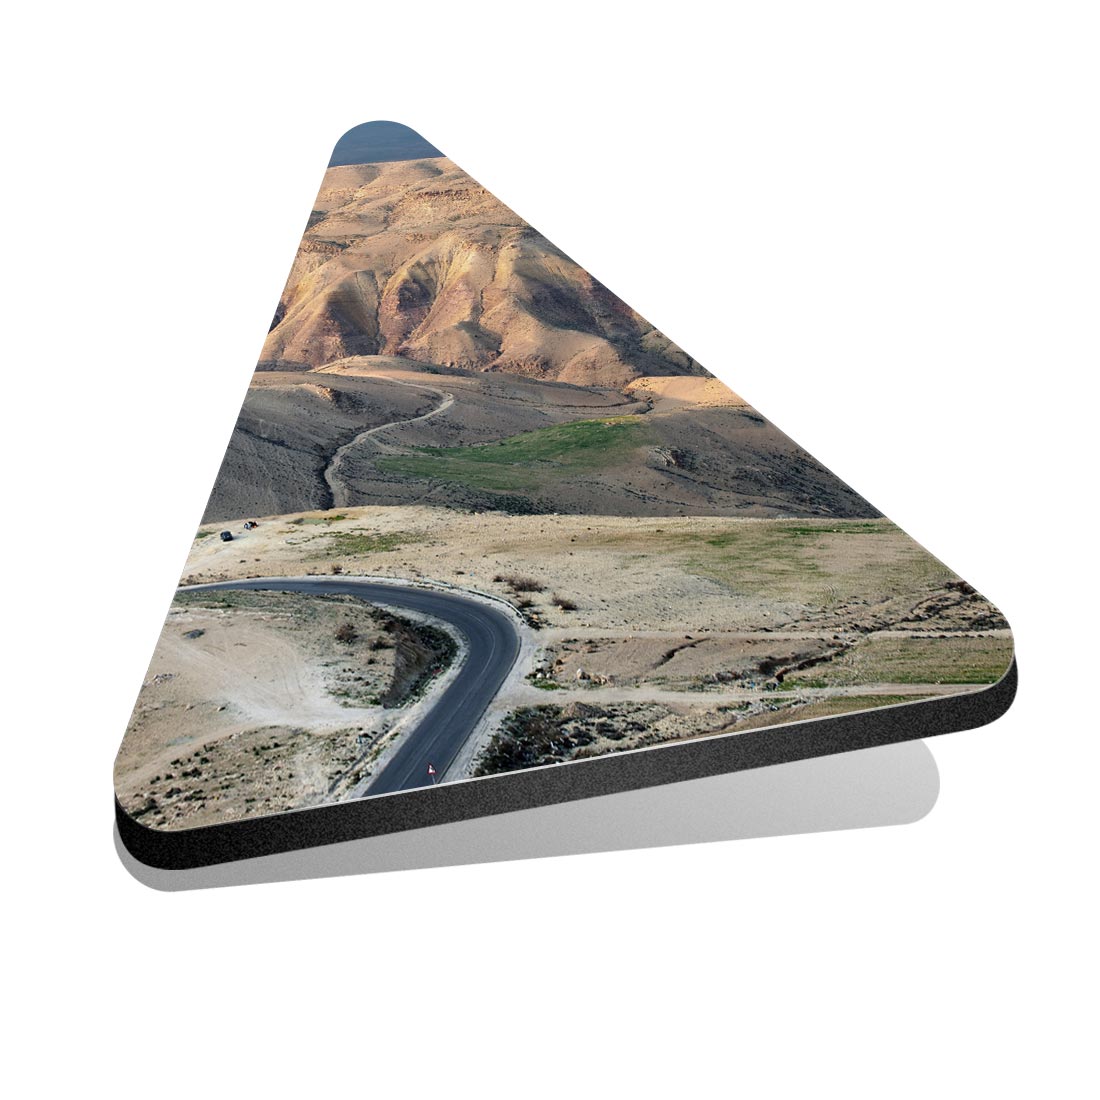 1x Triangle Fridge MDF Magnet Mount Nebo Jordan Travel #51509 - Picture 1 of 1